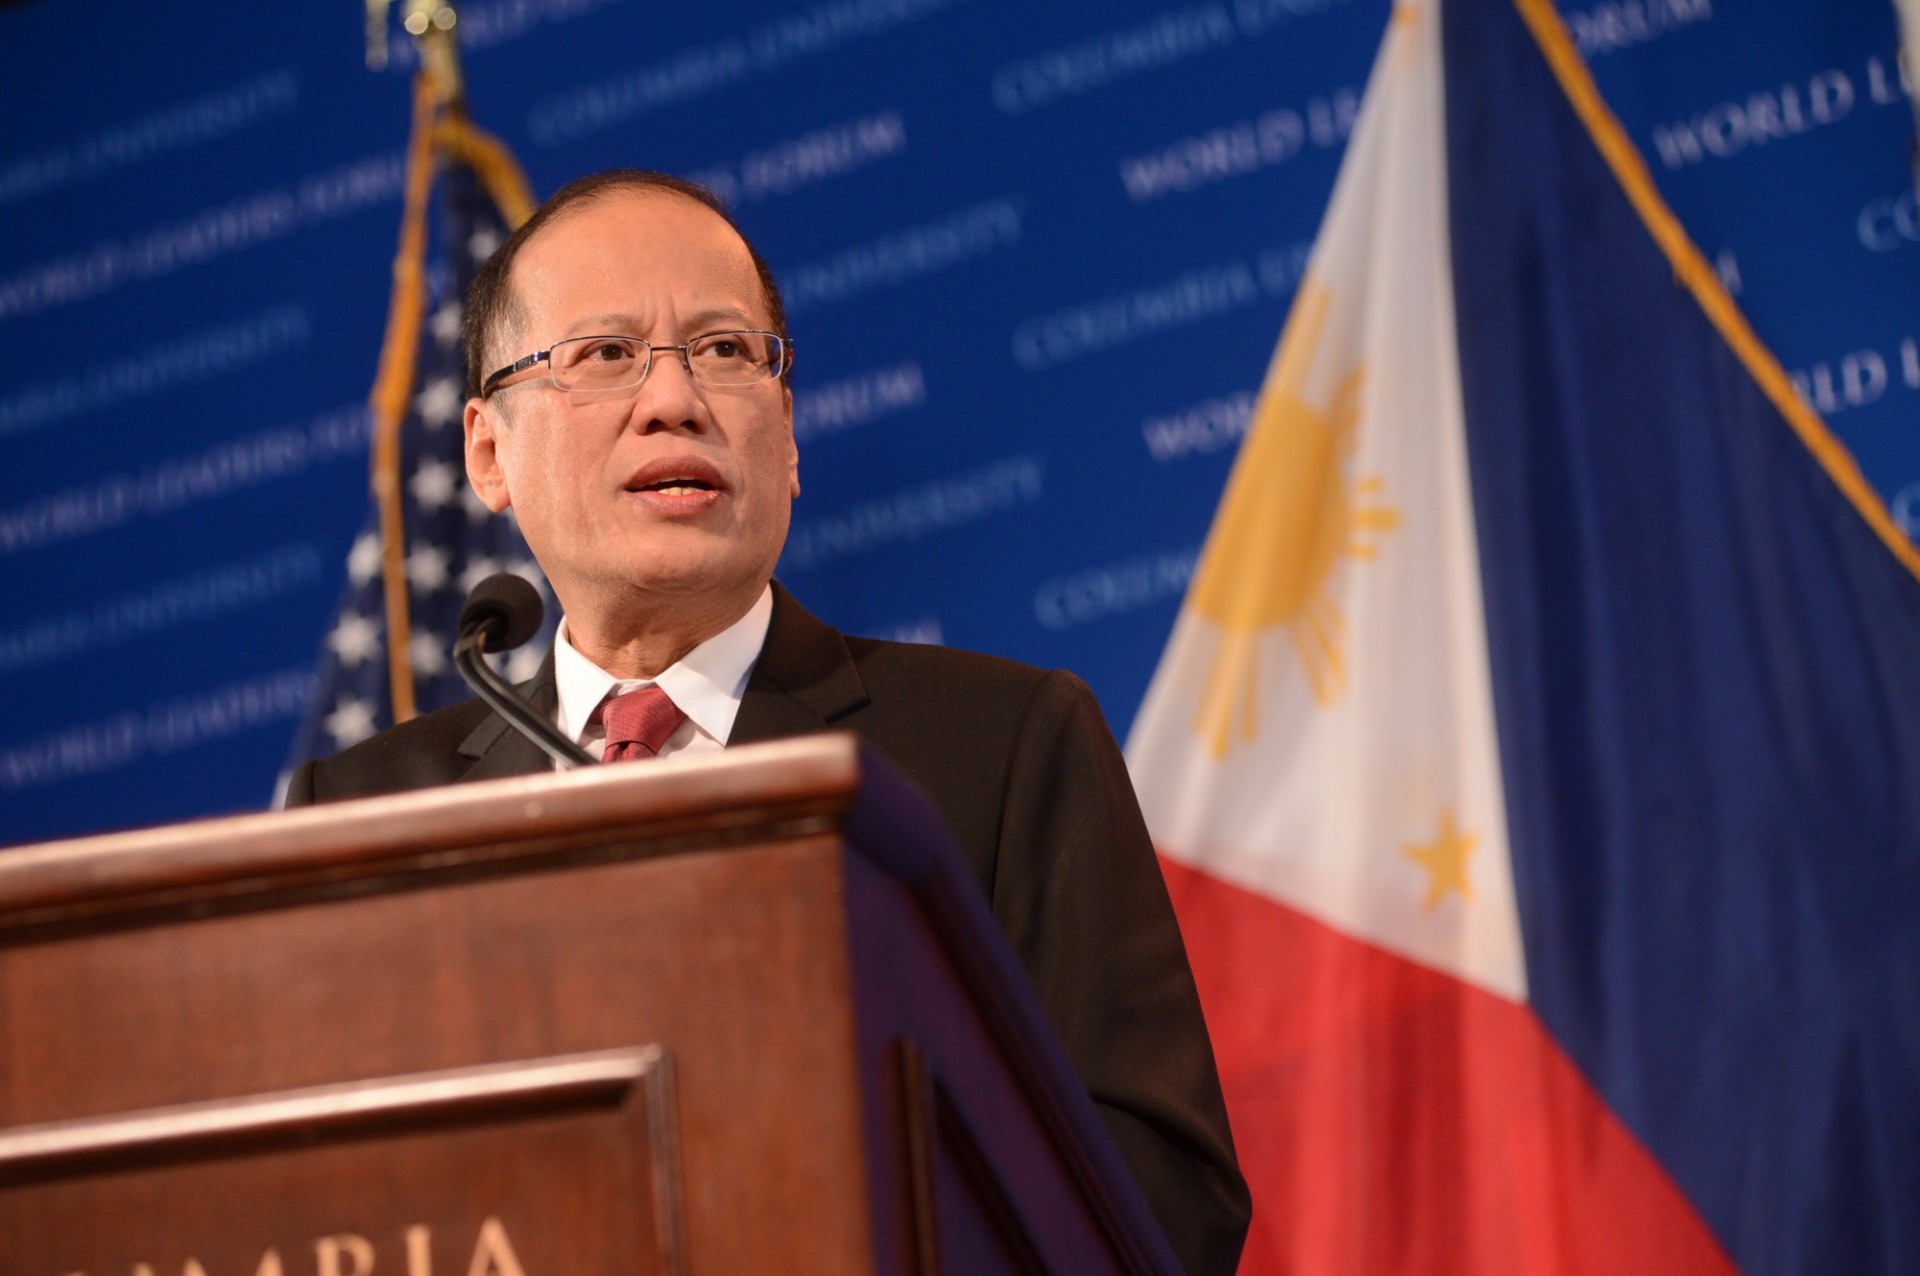 President Benigno S. Aquino III of the Republic of the Philippines